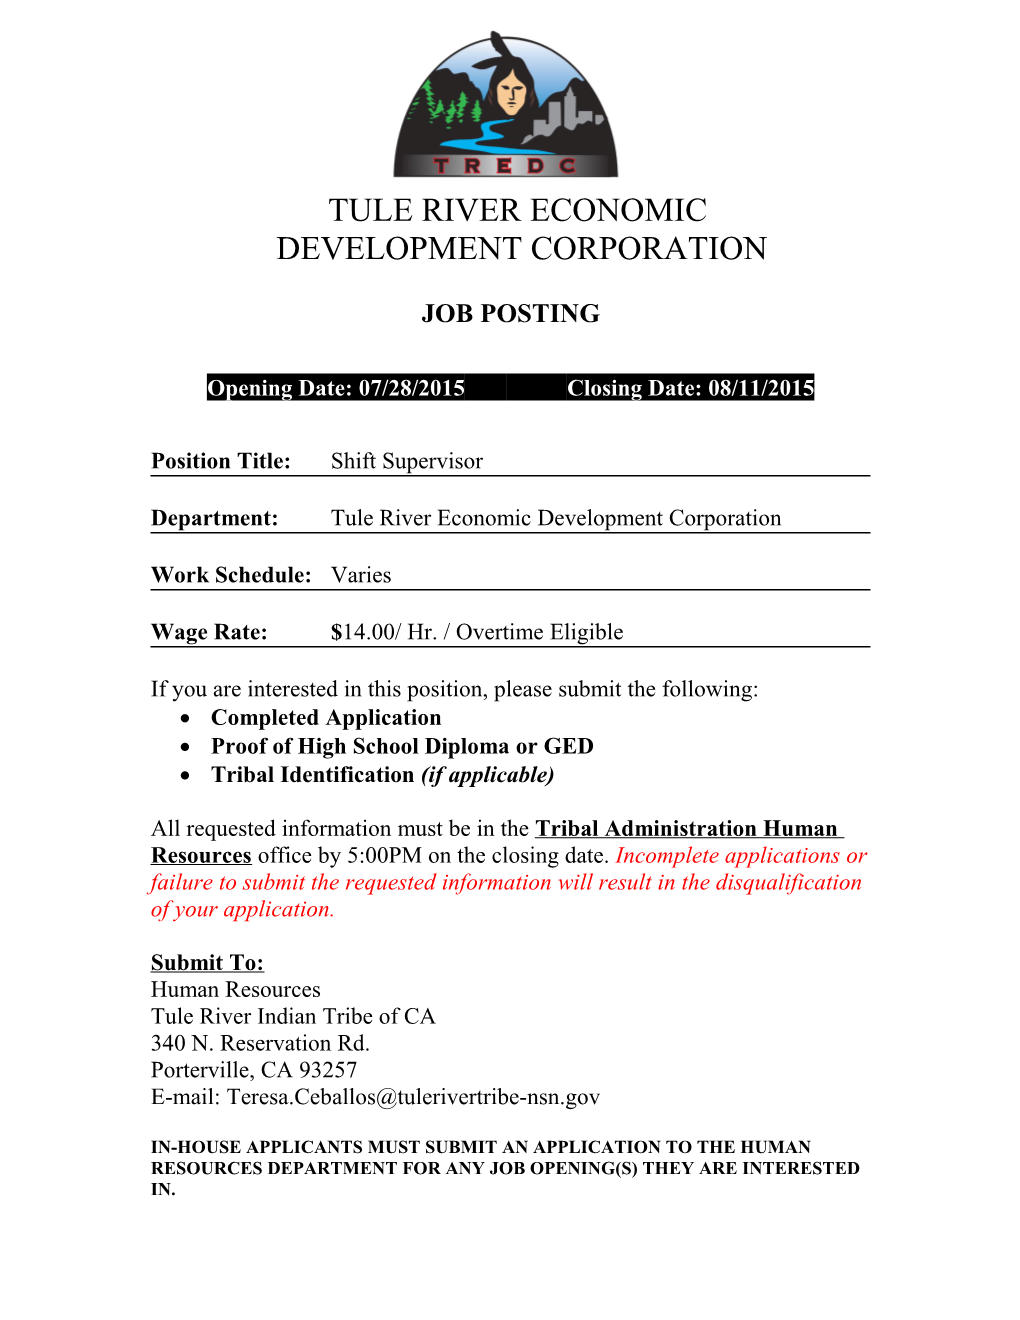 Tule River Economic